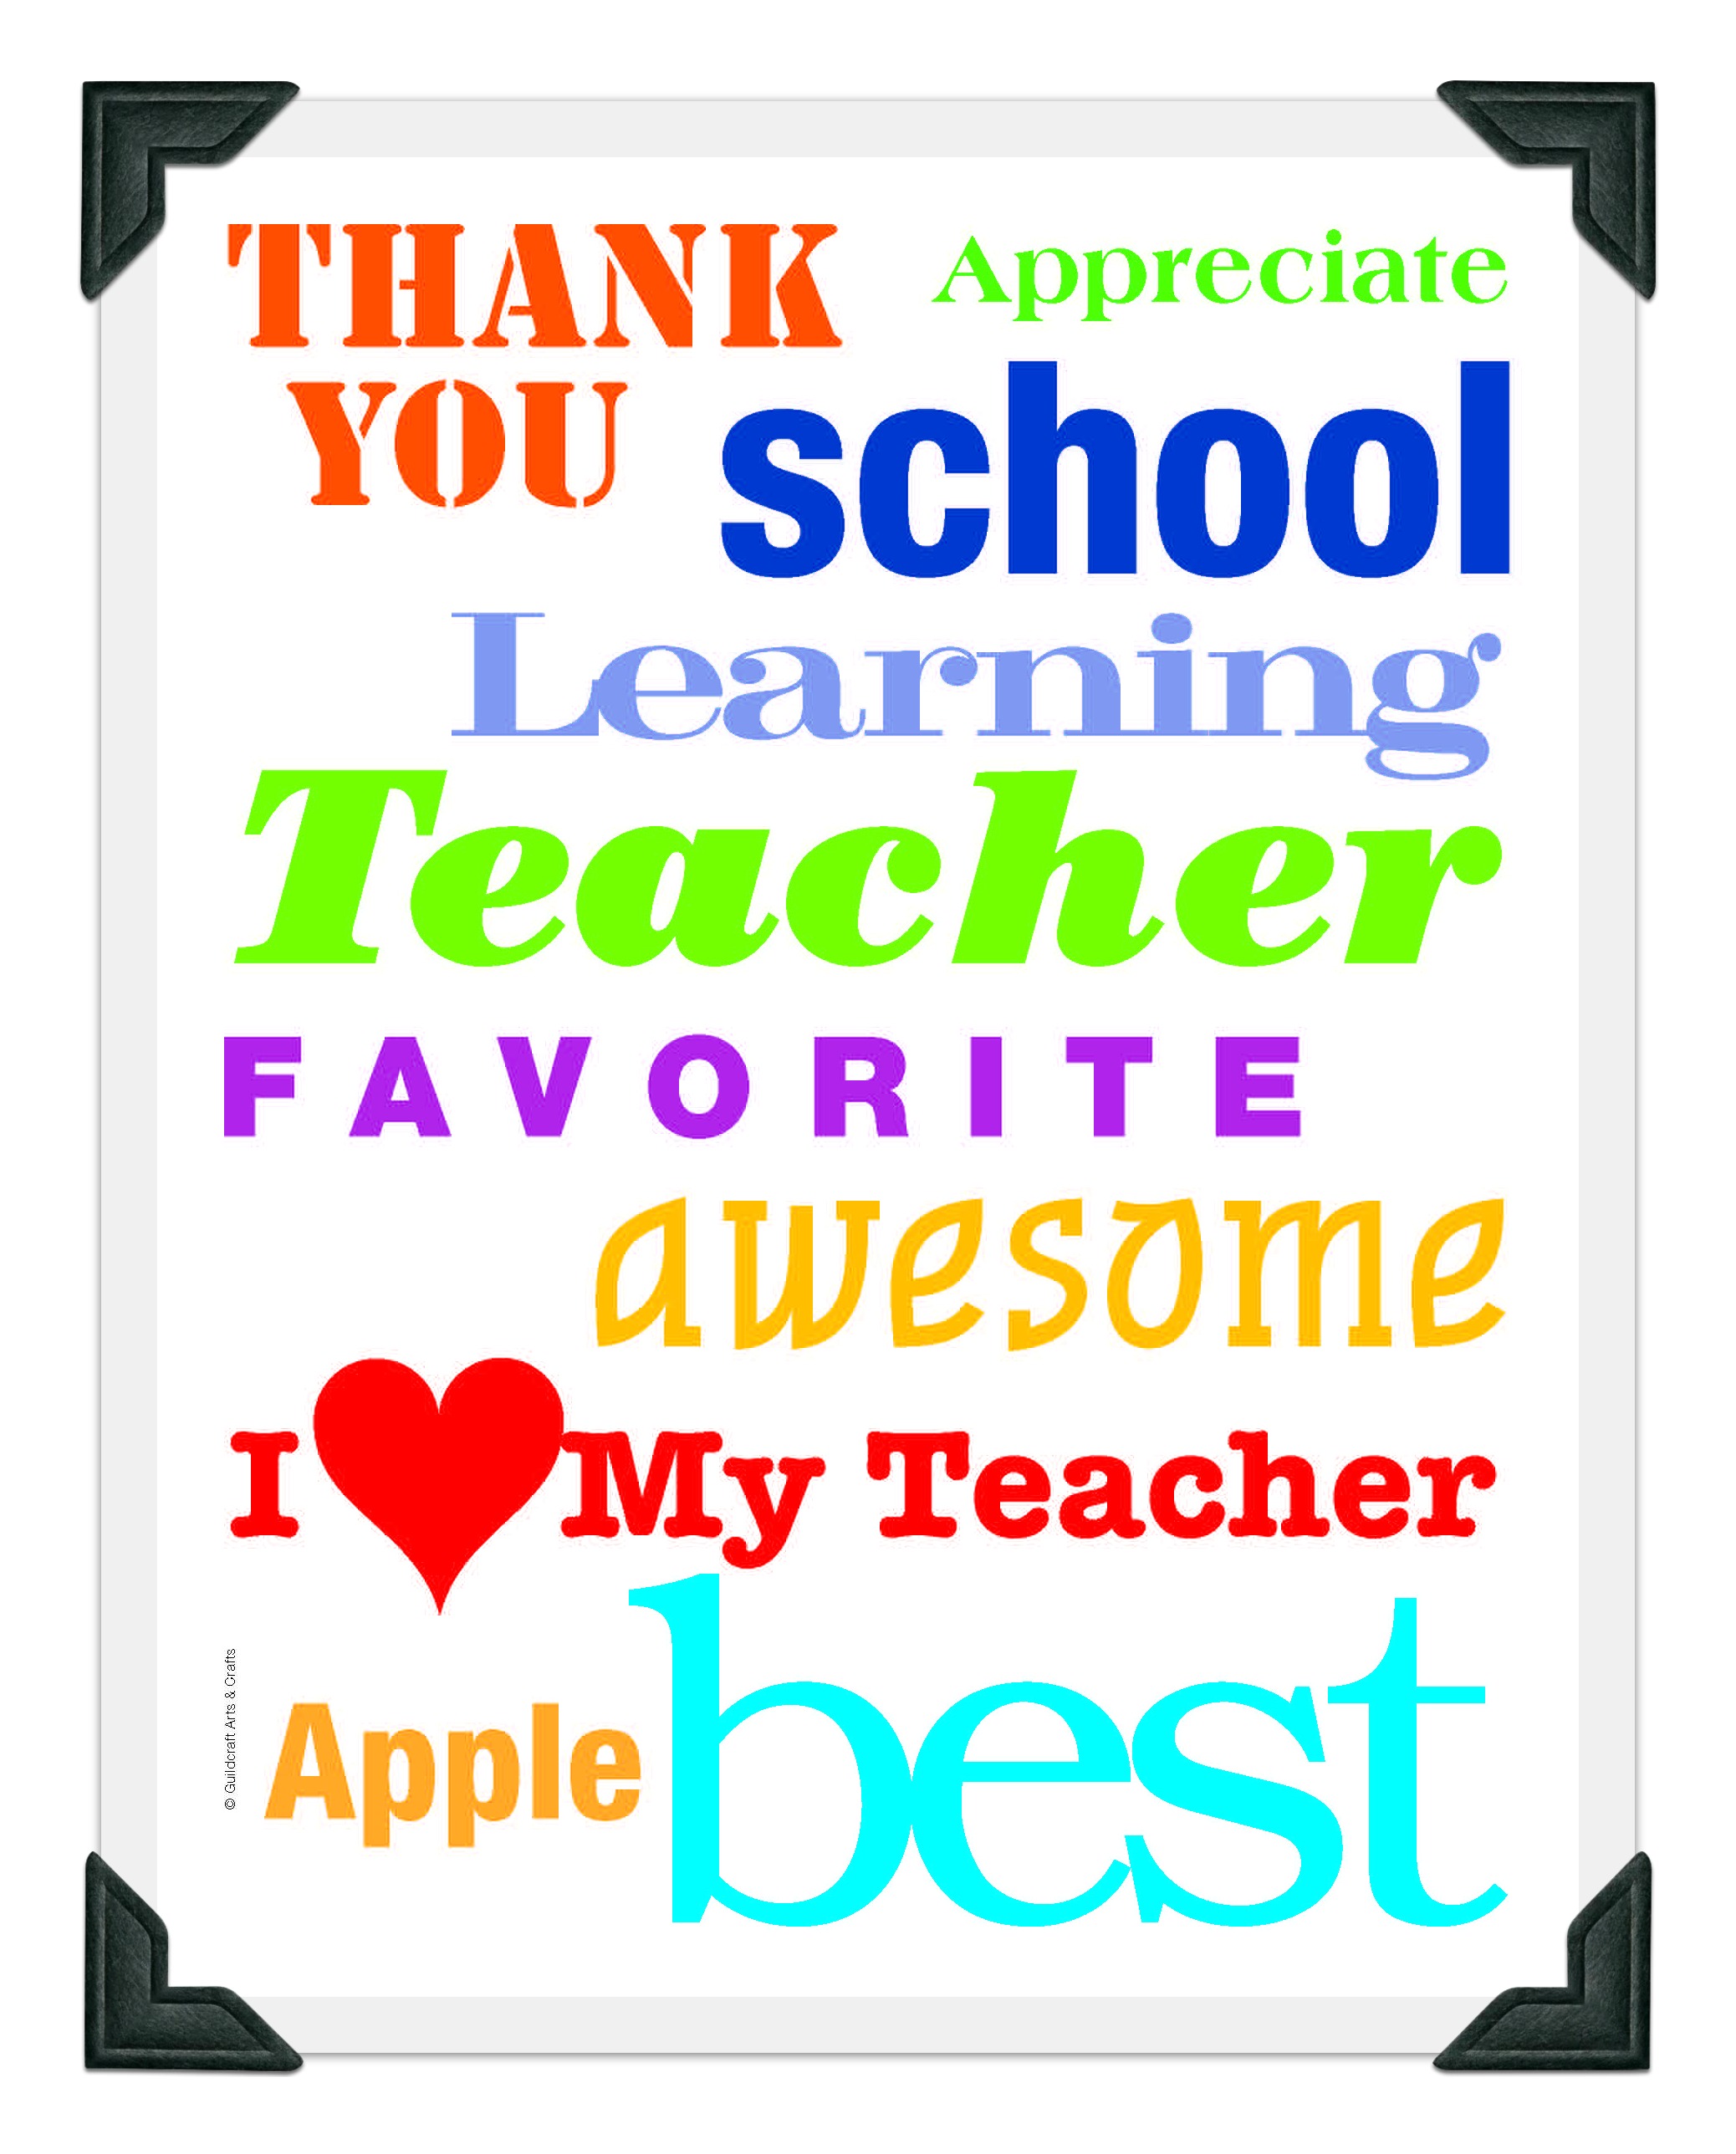 free clipart for teacher appreciation week - photo #44